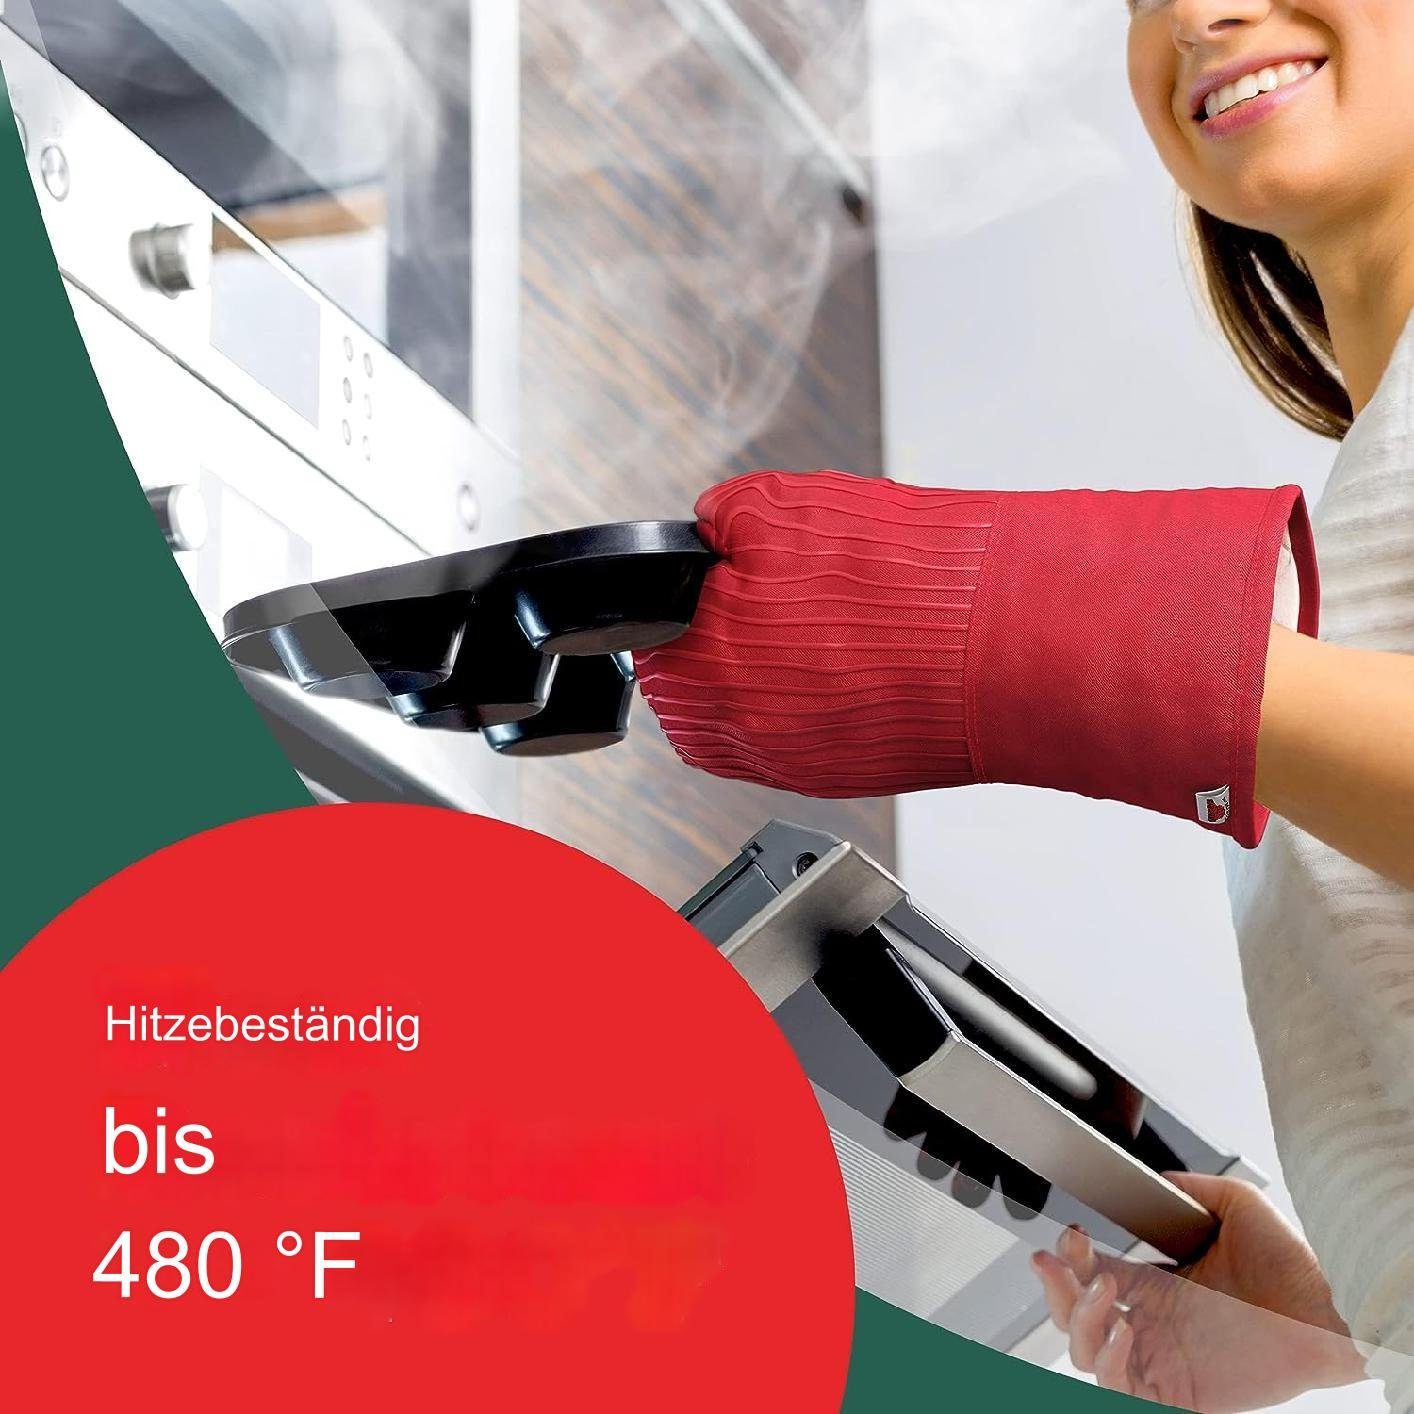 HIBNOPN Topfhandschuhe Hitzebeständige Ofenhandschuhe, Silikon Design,Rot, (2-tlg) Anti-Rutsch